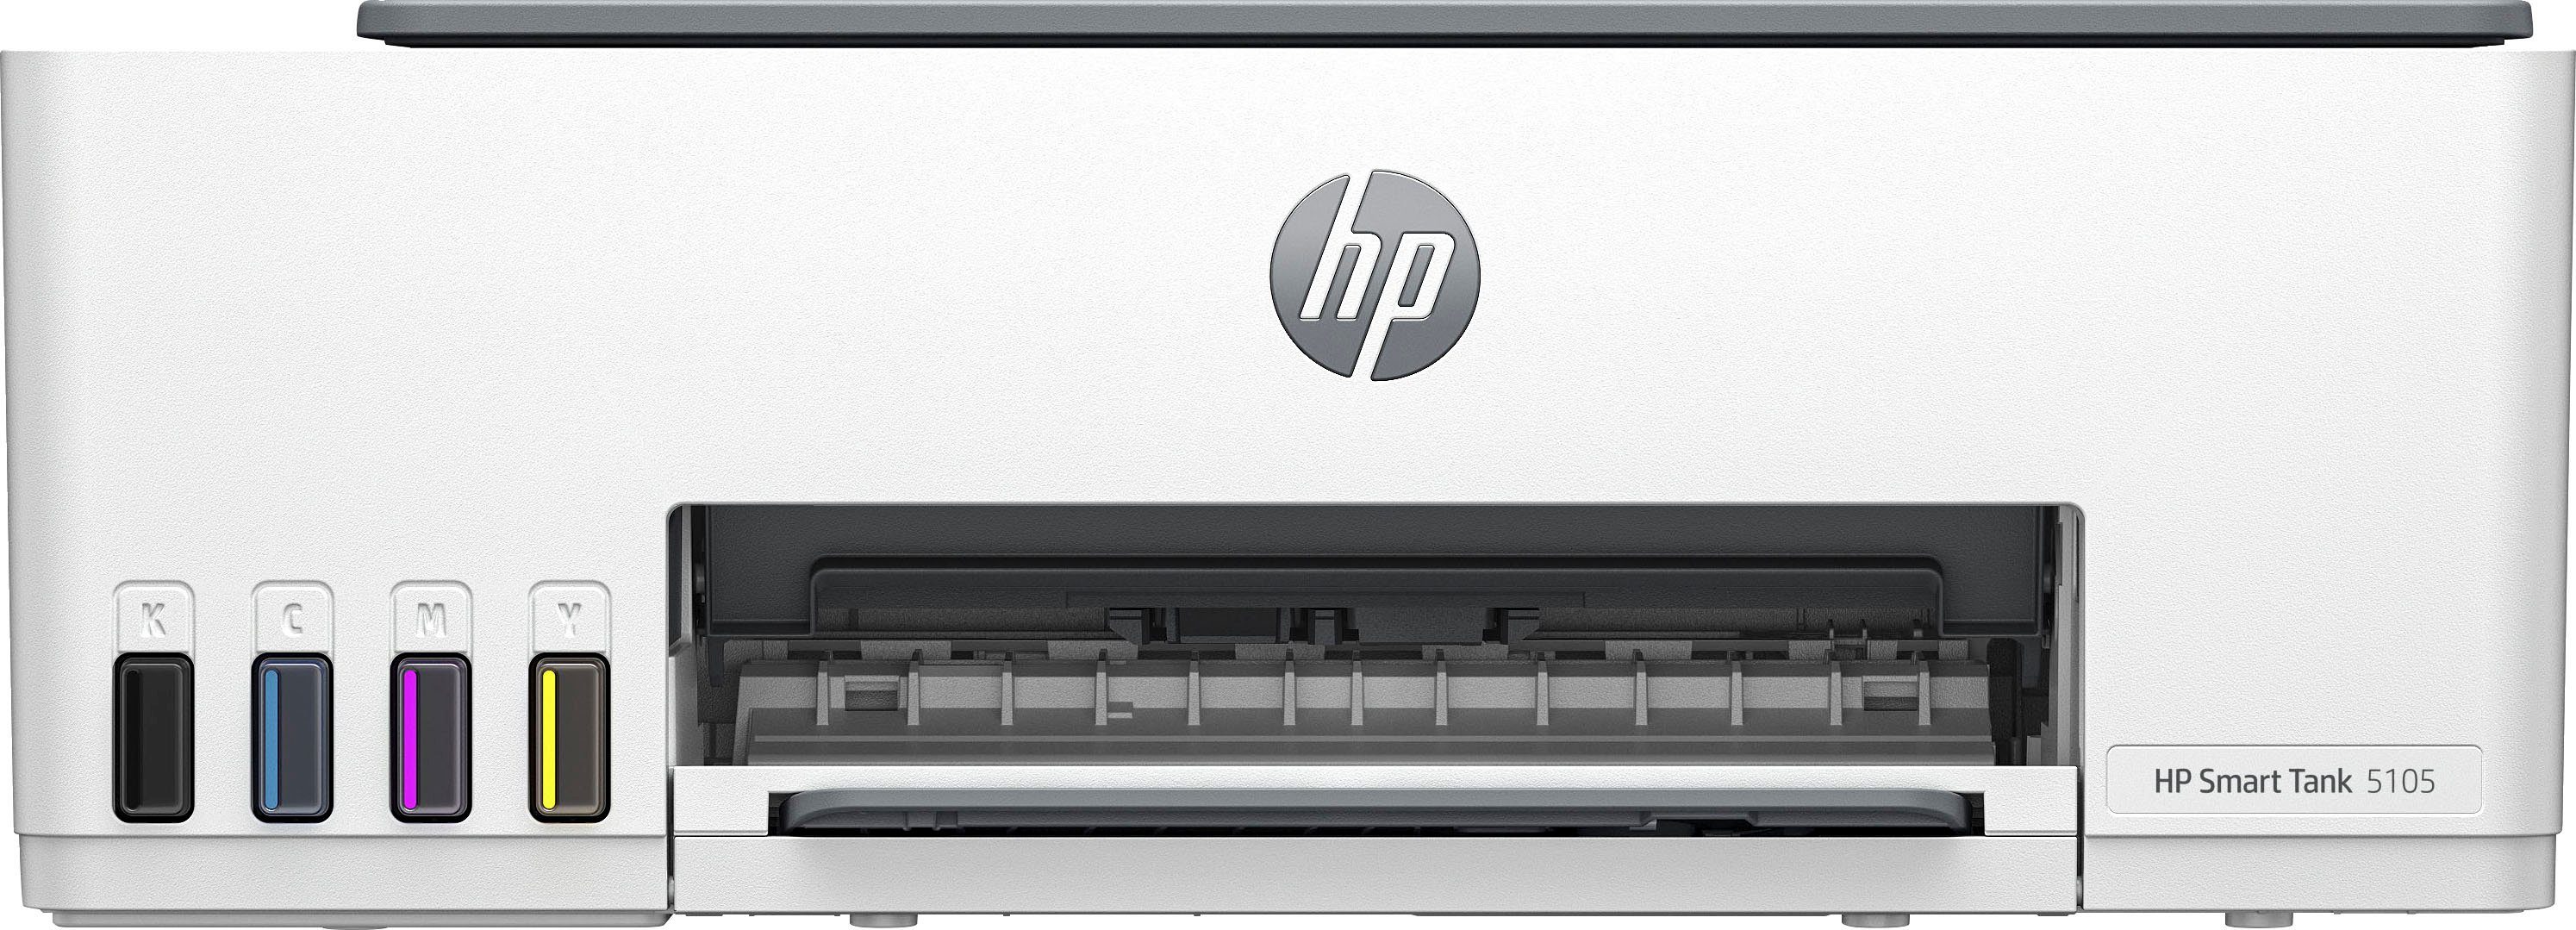 HP Smart kompatibel) Multifunktionsdrucker, HP Instant WLAN (Wi-Fi), Ink (Bluetooth, Tank 5105